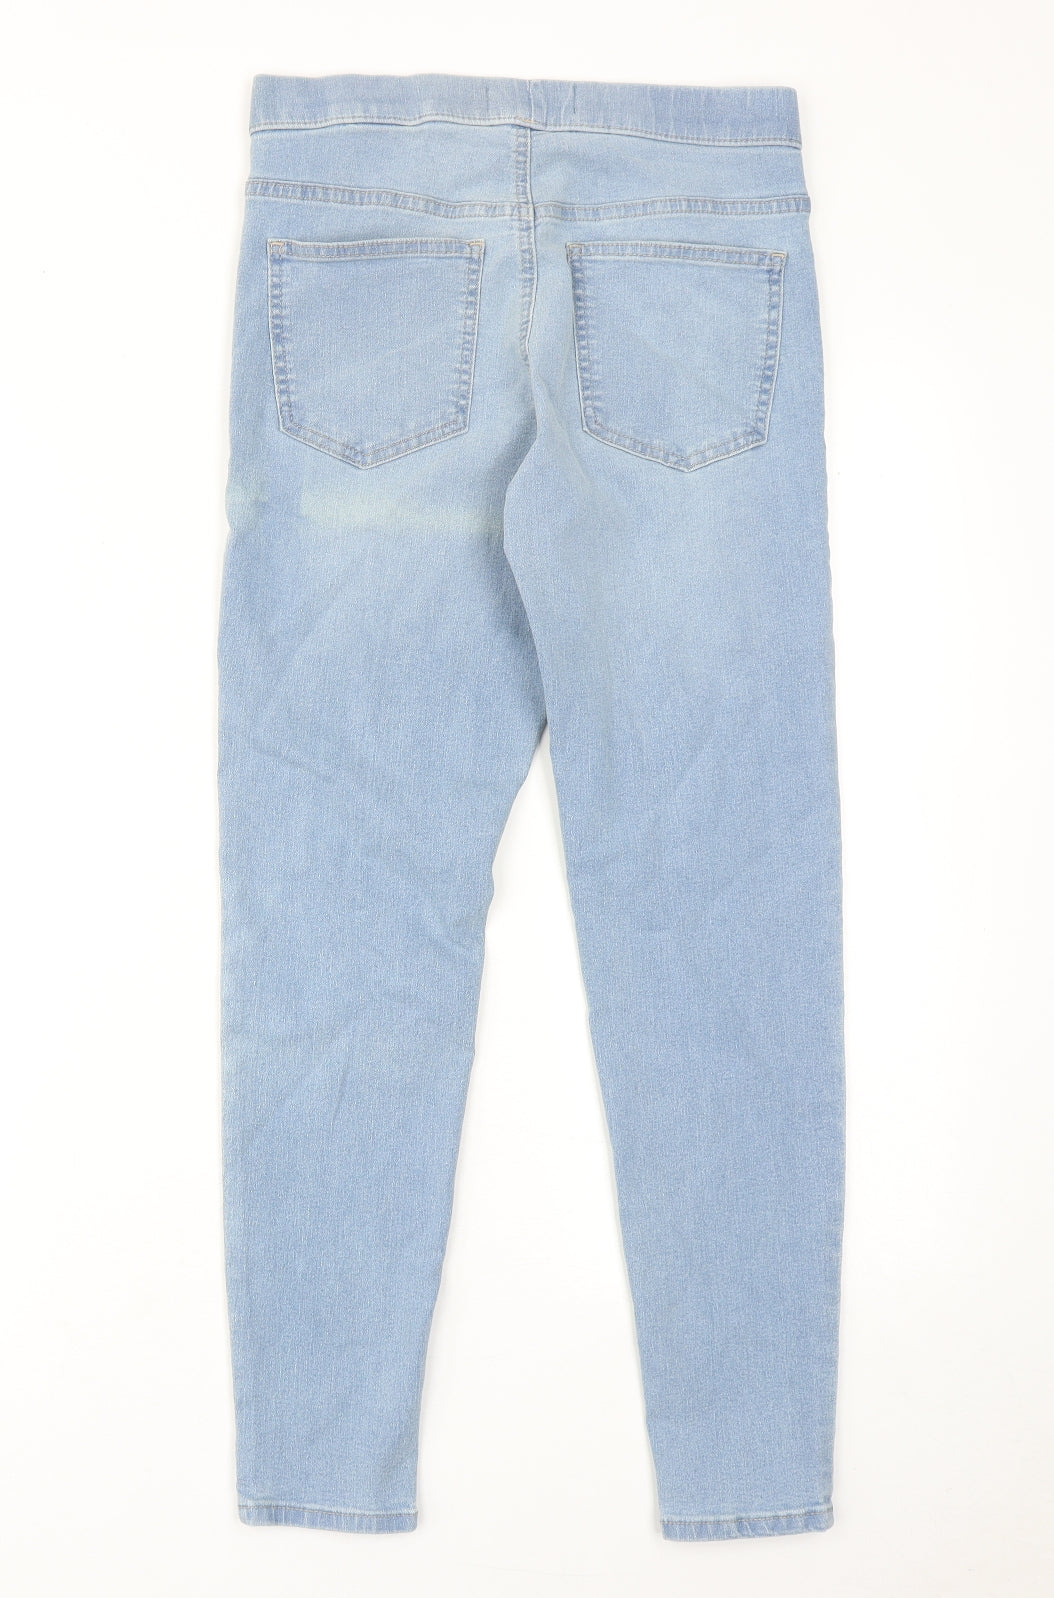 Marks and Spencer Womens Blue Cotton Jegging Jeans Size 10 Regular